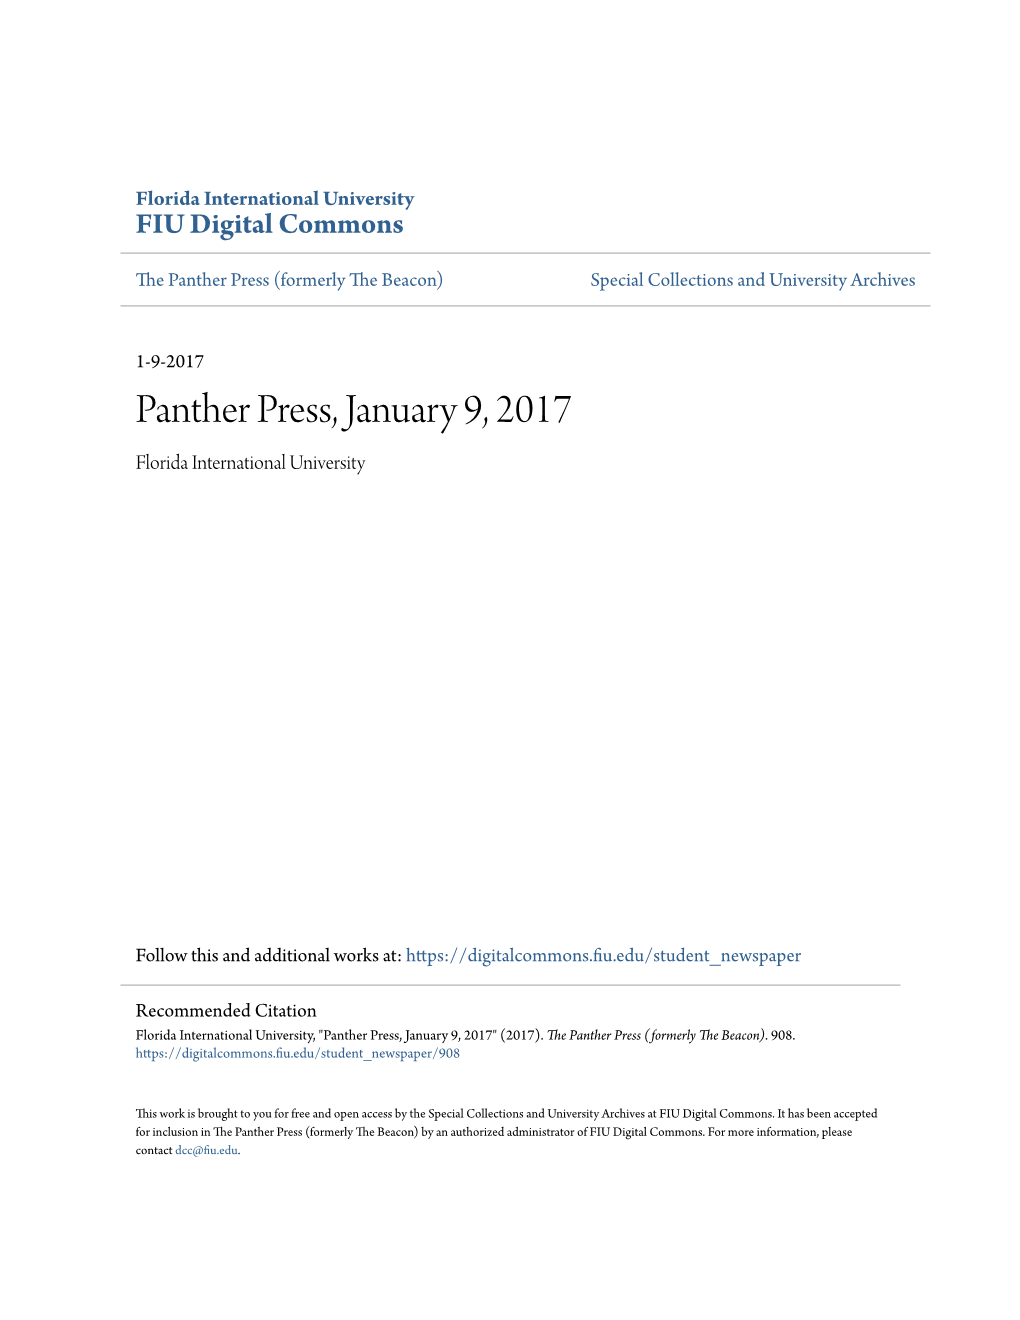 Panther Press, January 9, 2017 Florida International University